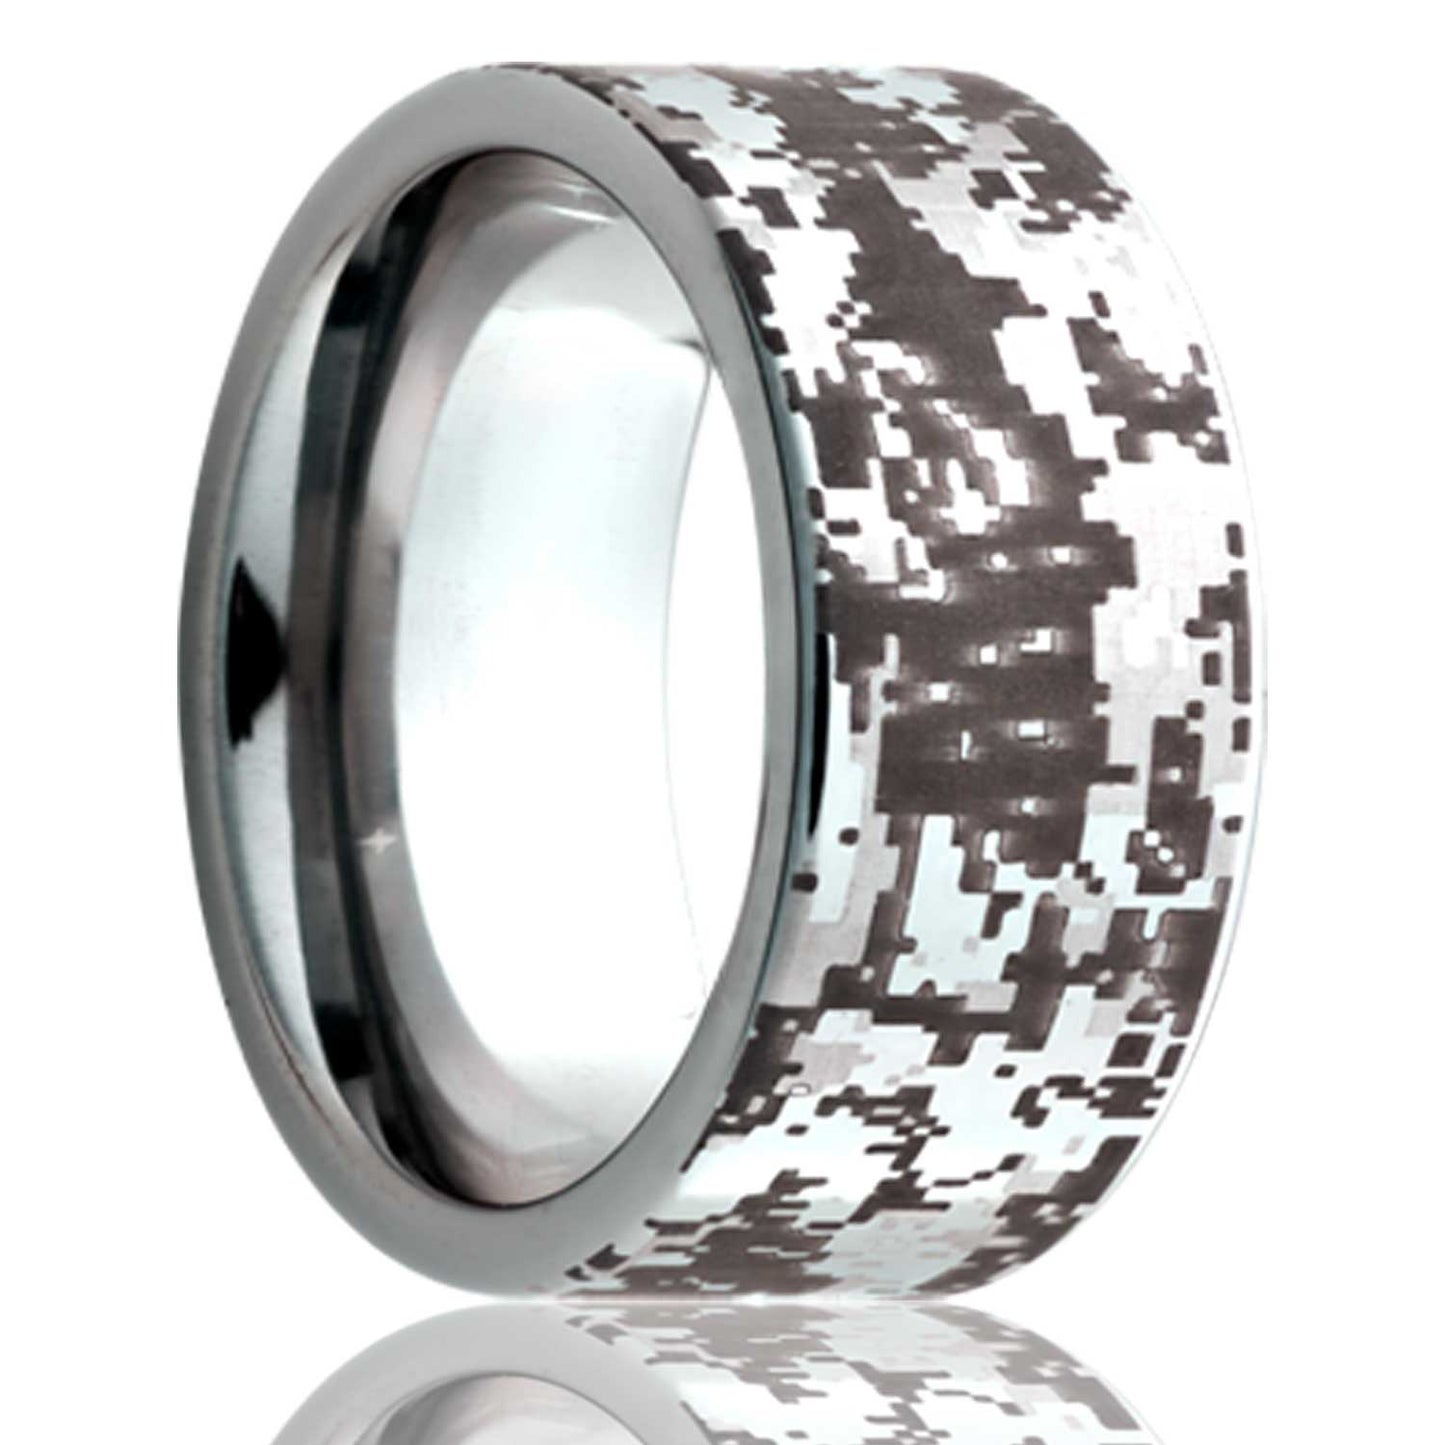 A digital camo titanium wedding band displayed on a neutral white background.